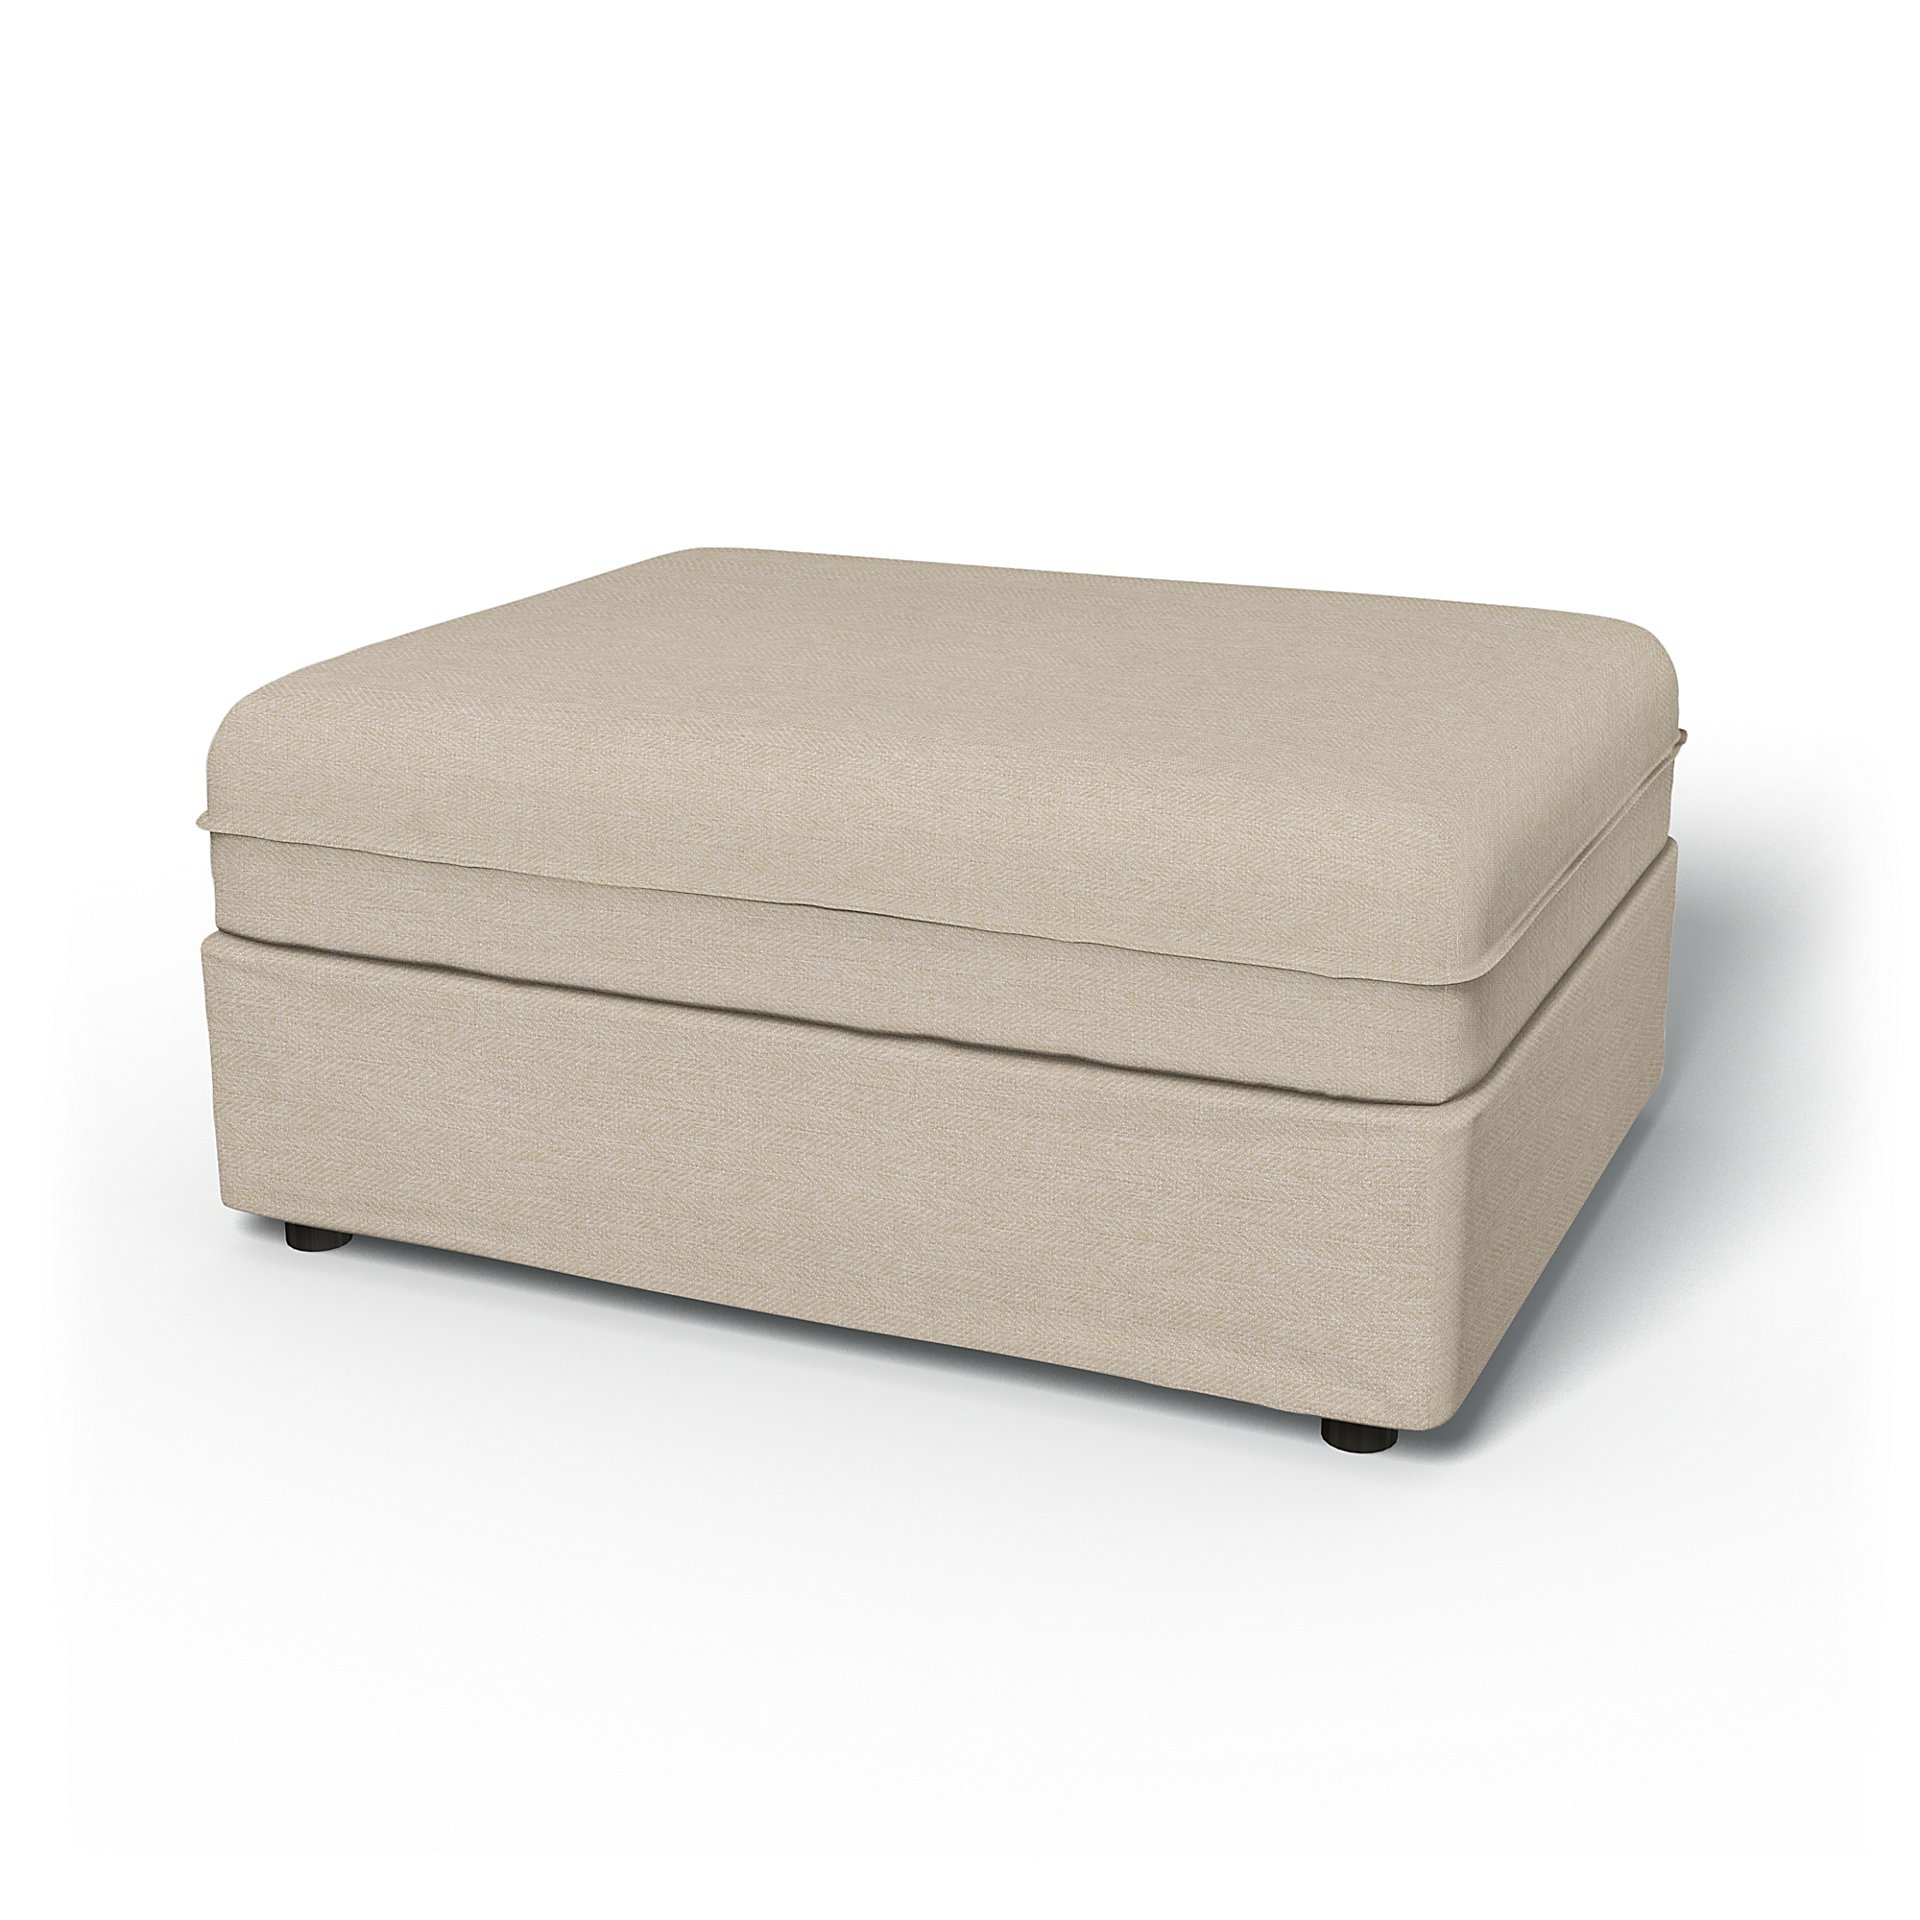 IKEA - Vallentuna Seat Module Cover 100x80cm 39x32in, Natural, Boucle & Texture - Bemz